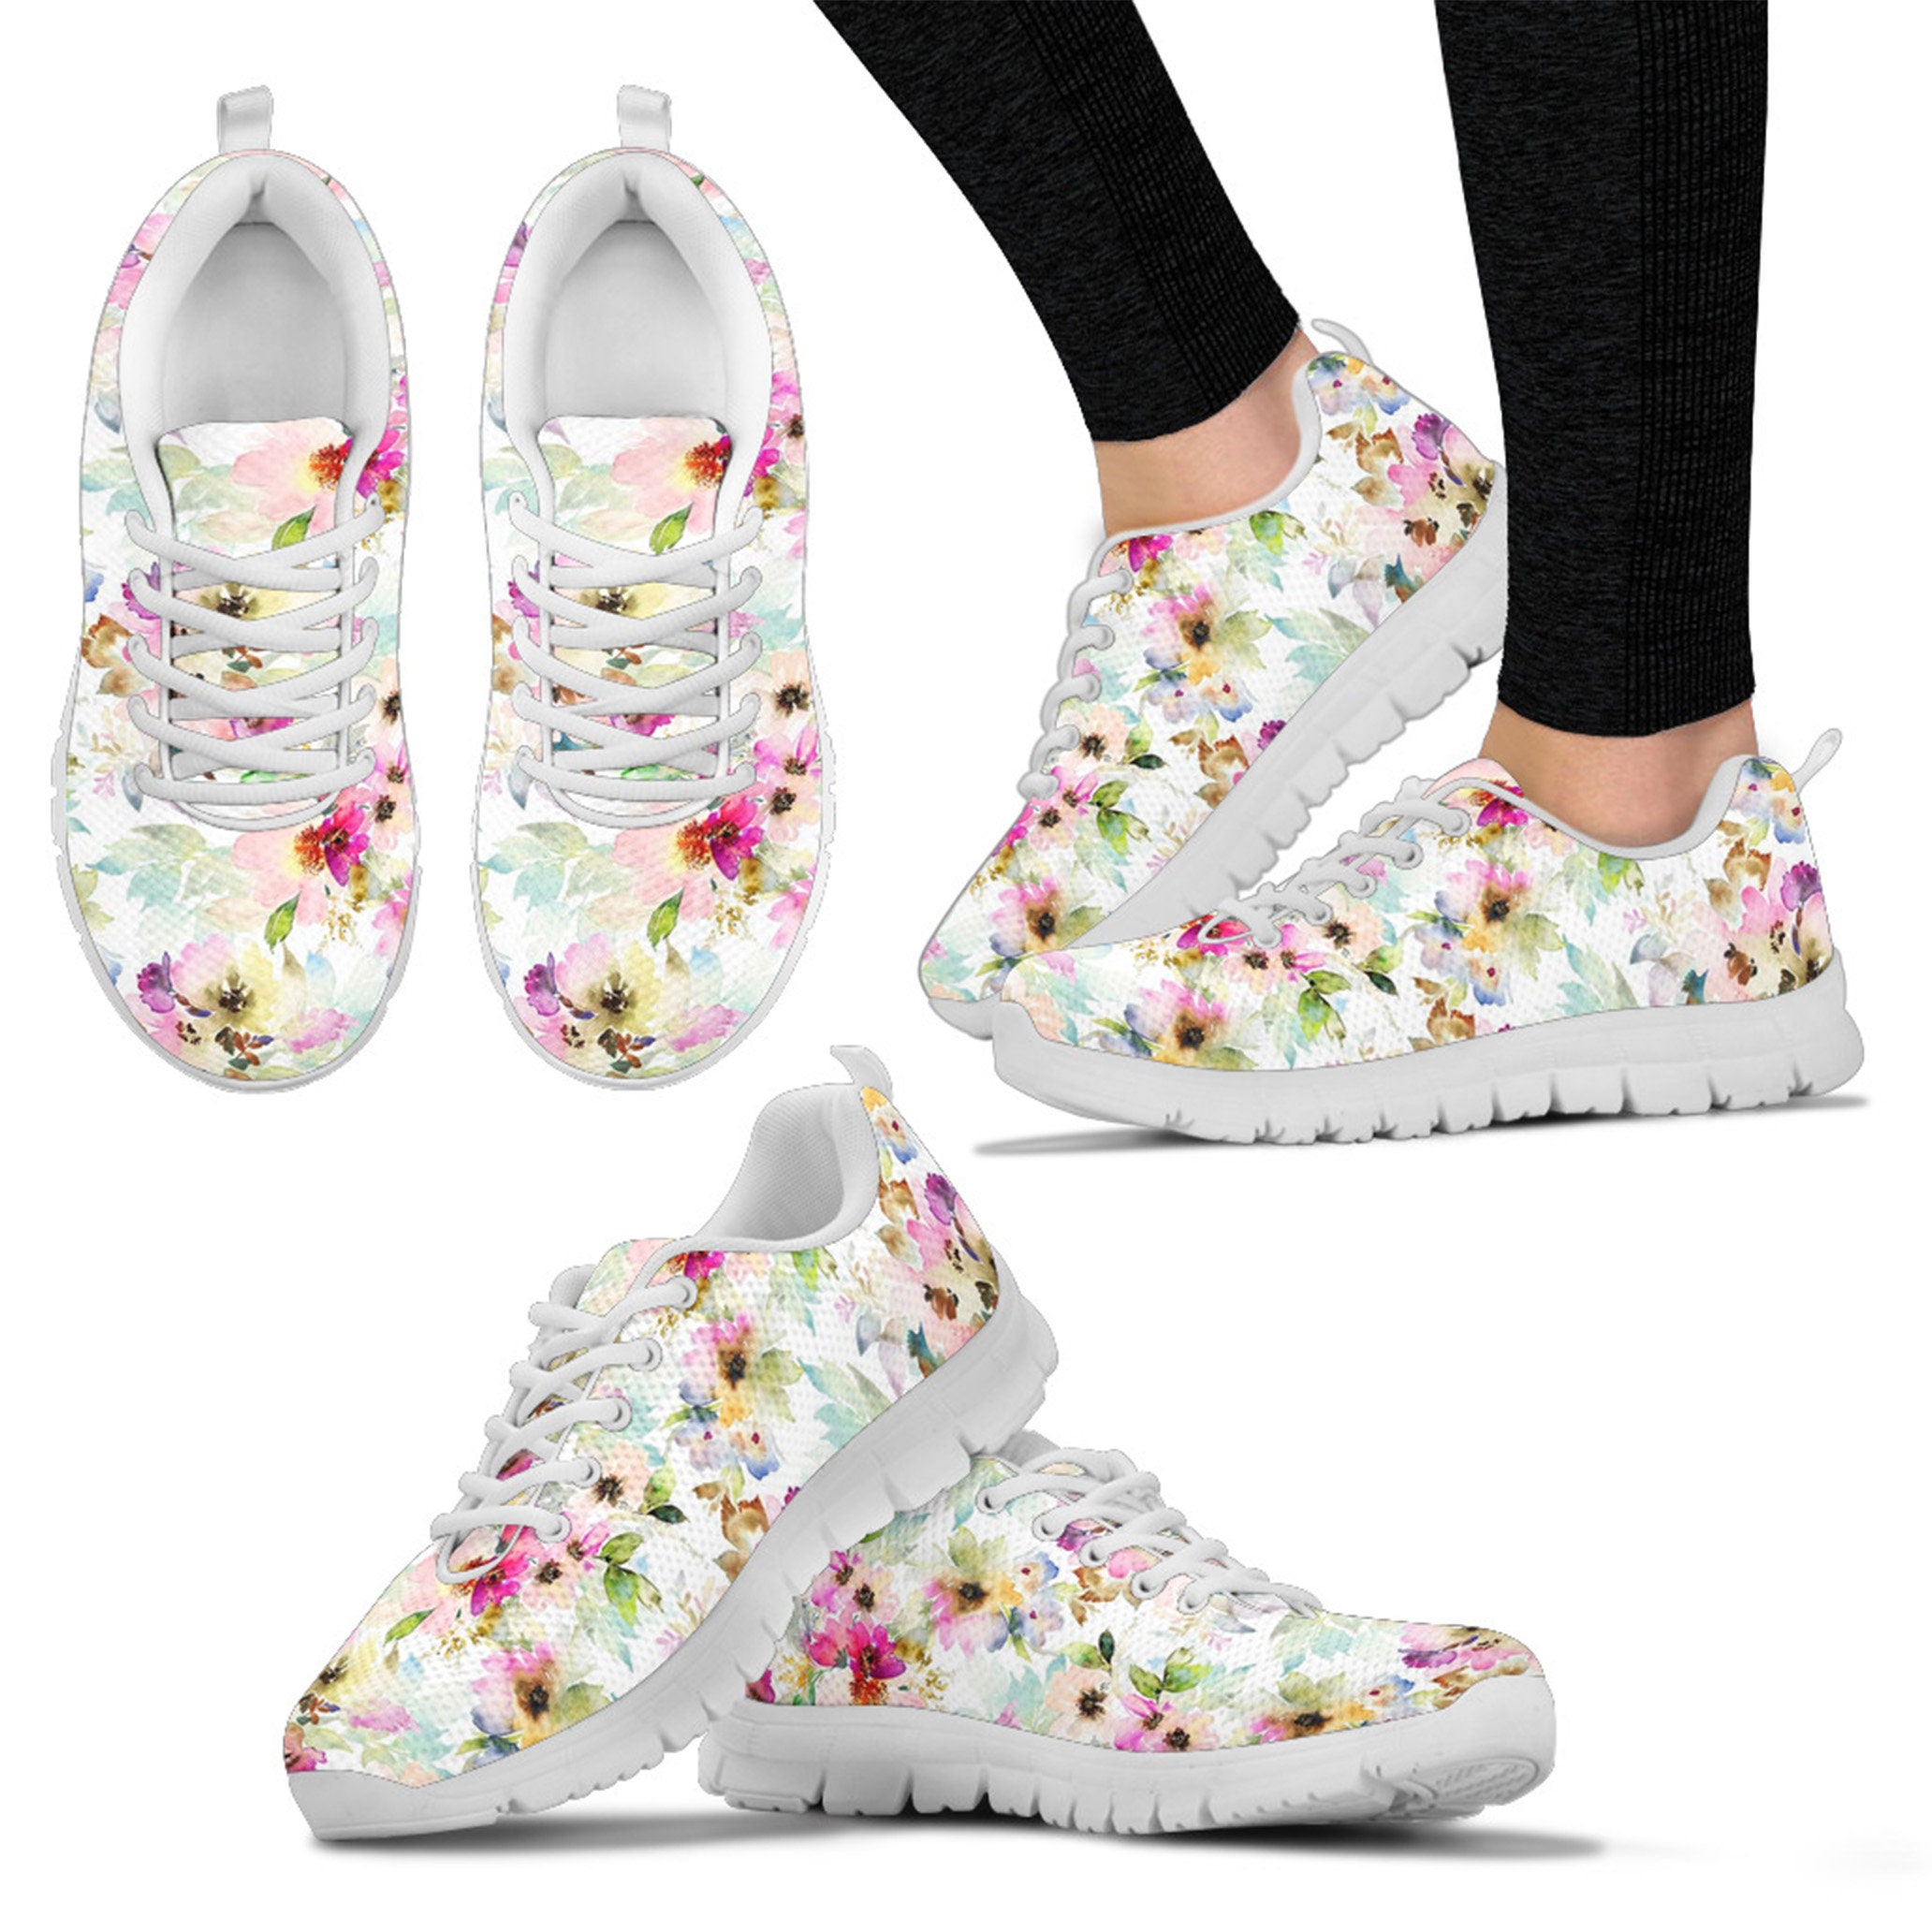 Agacharse rescate Anuncio Nike floral shoes - Etsy España